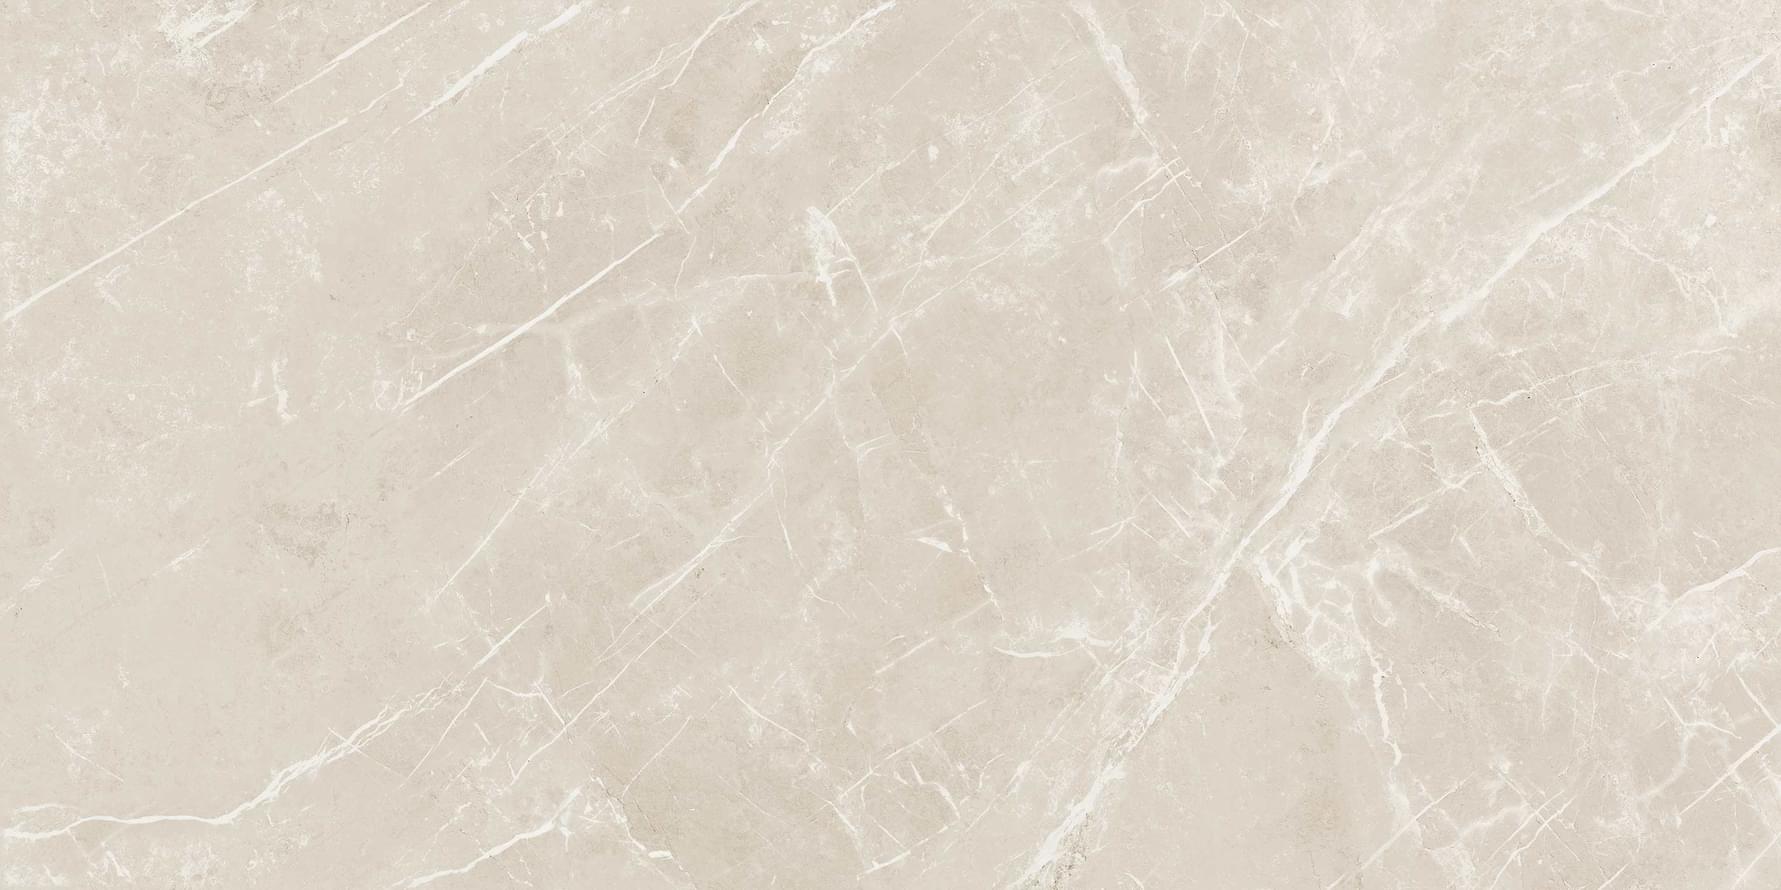 Cerim Elemental Stone White Dolomia Naturale 60x120